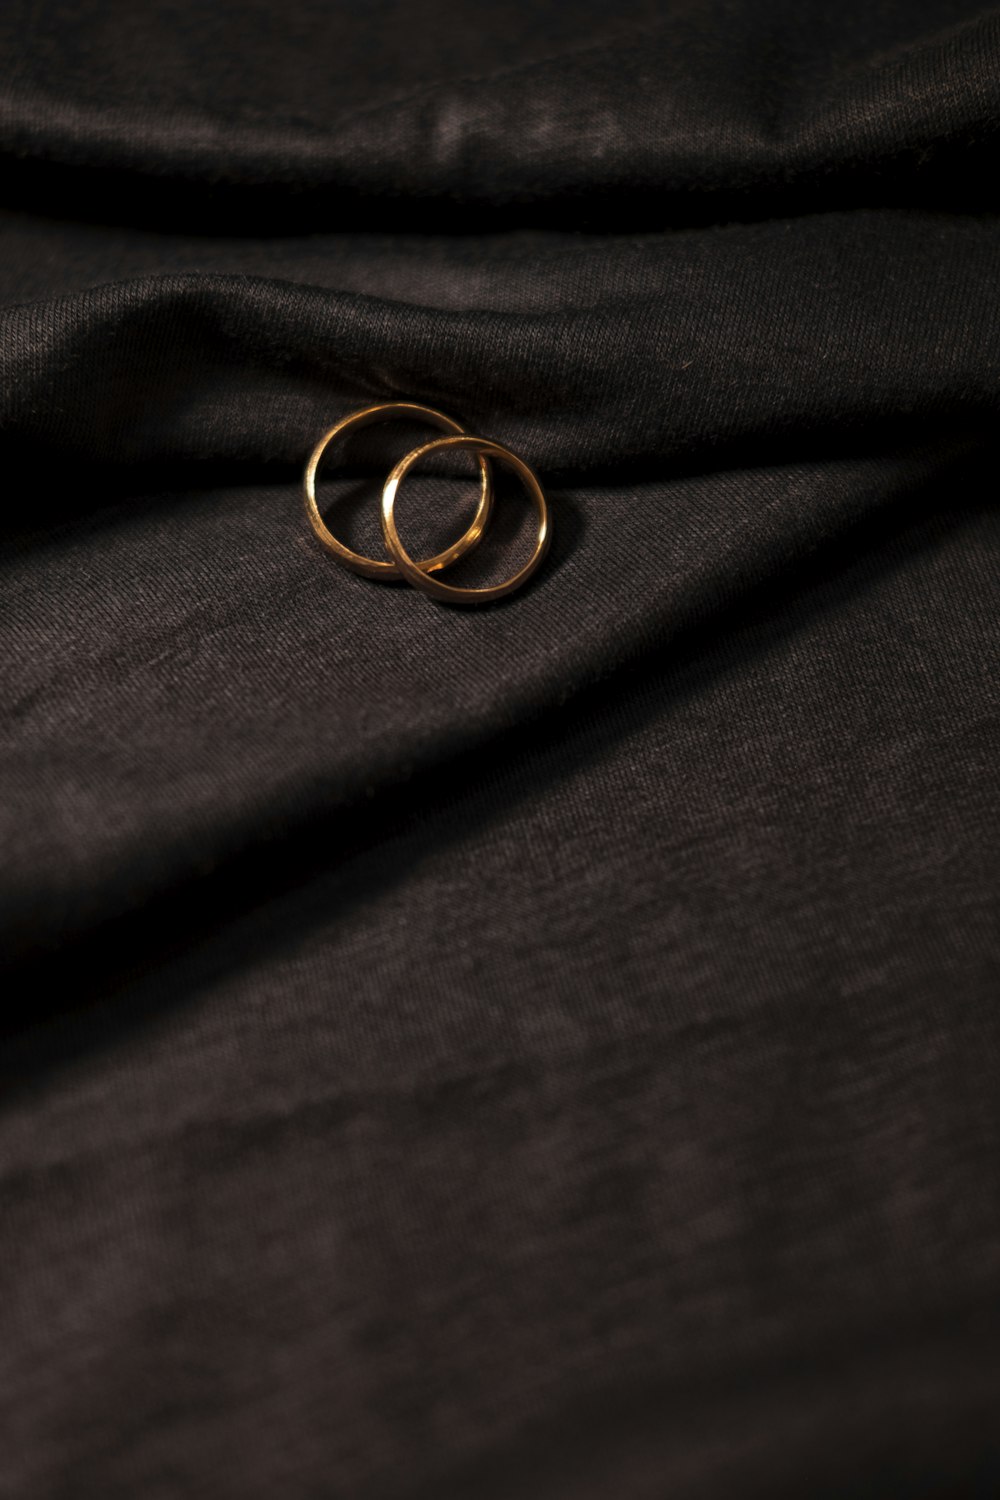 Goldring auf schwarzem Textil